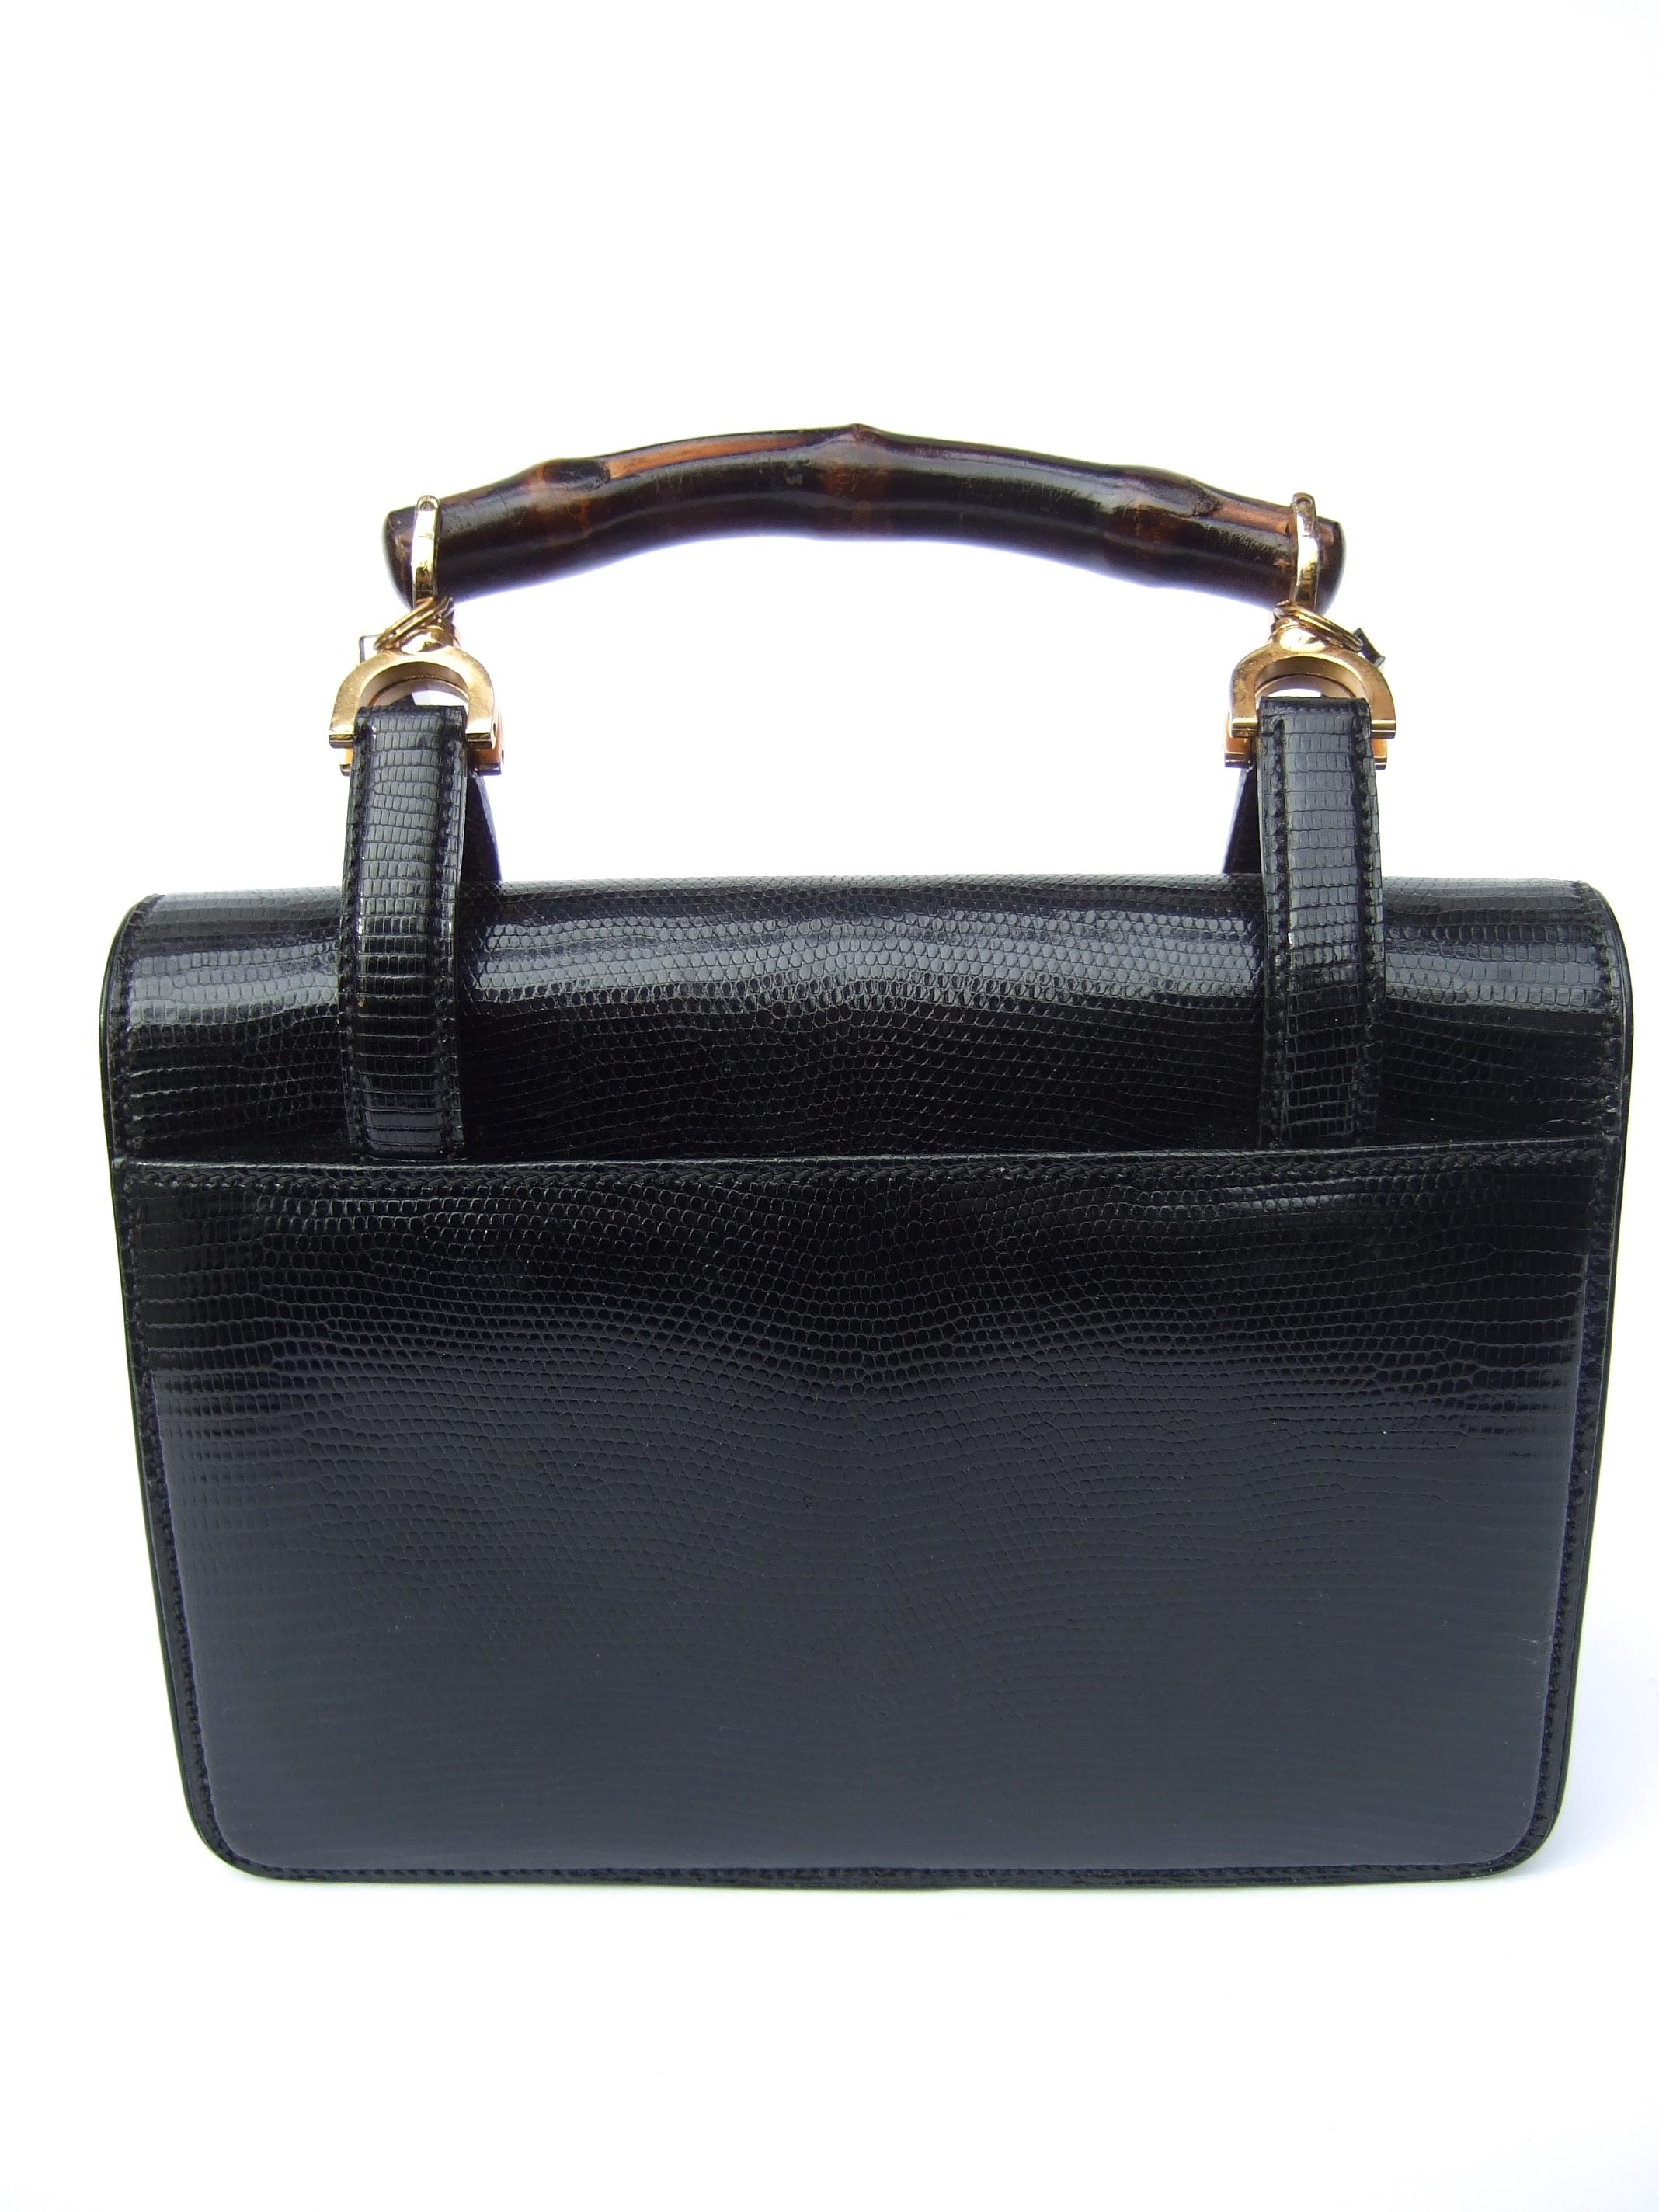 Rare Gucci Italian Black Lizard Leather Handbag - Shoulder Bag c 1970s 3